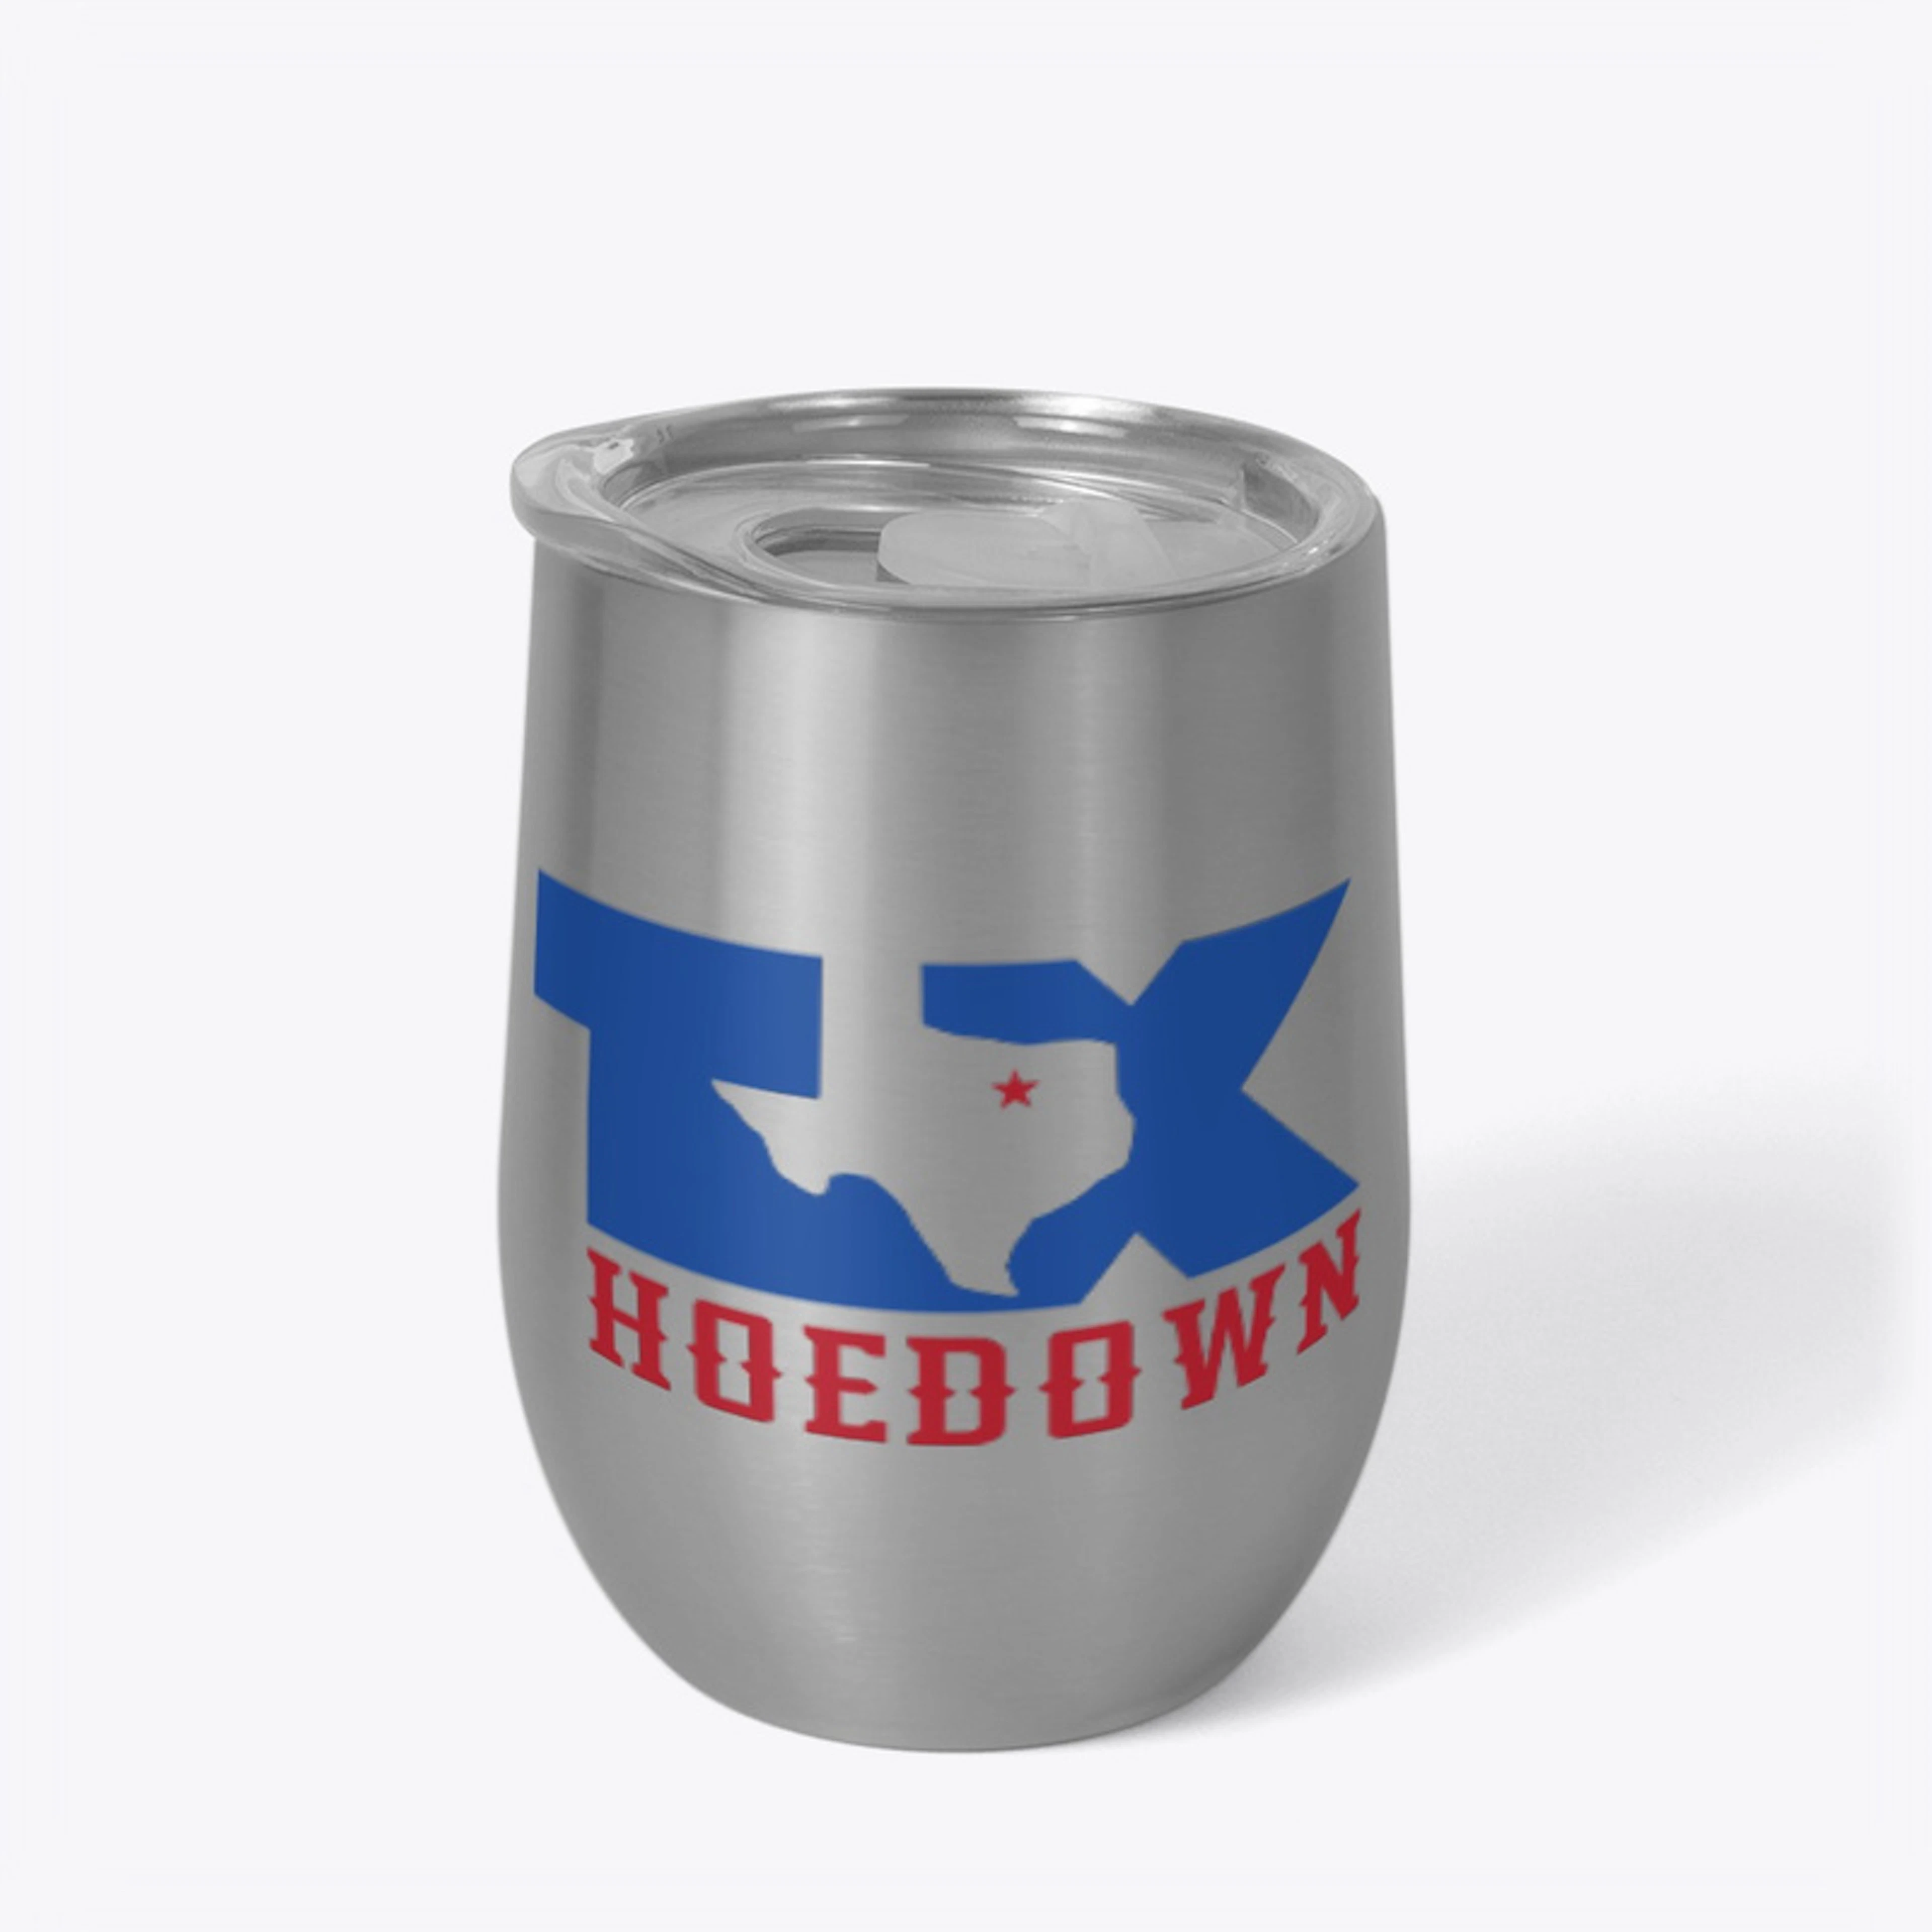 Texas Hoedown logo